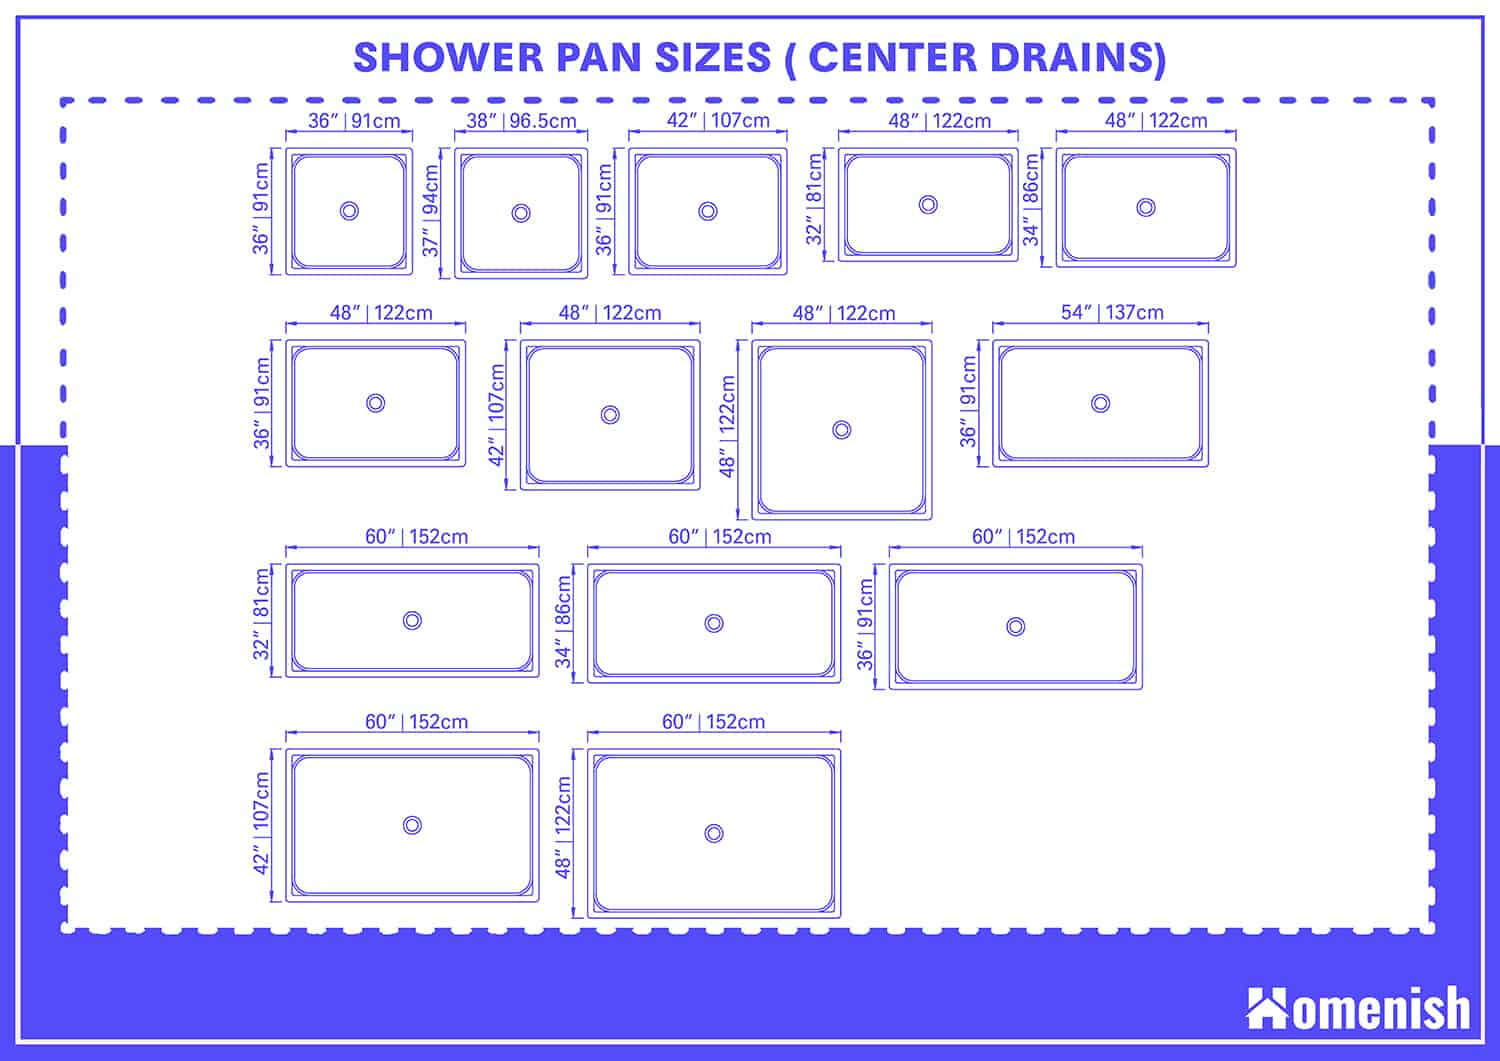 Shower Pan Sizes (Center Drains)